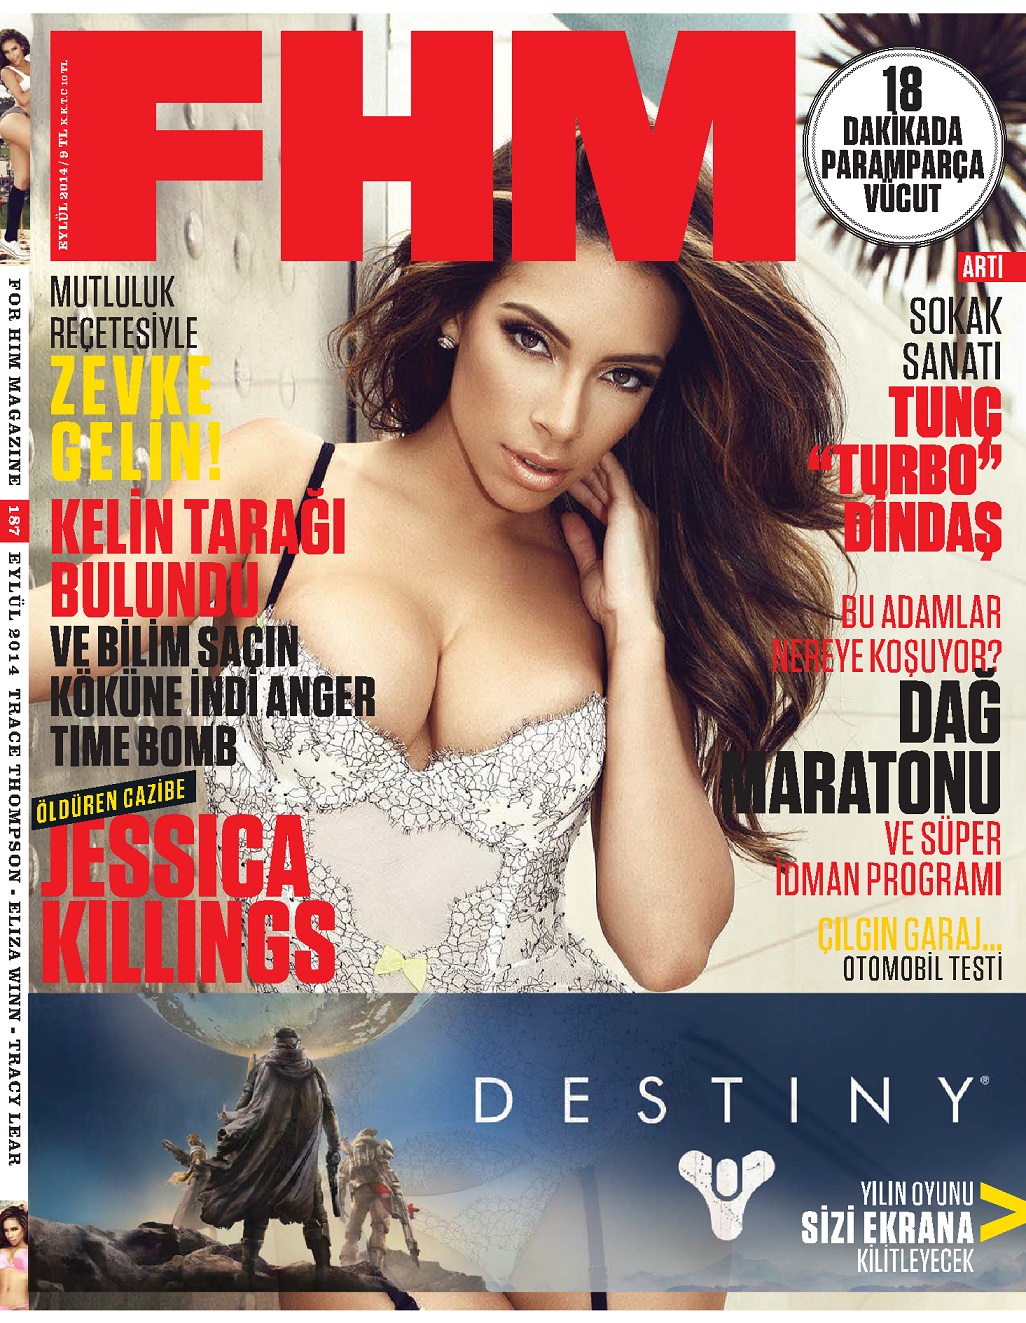 Jessica Killings for FHM Magazine Turkey